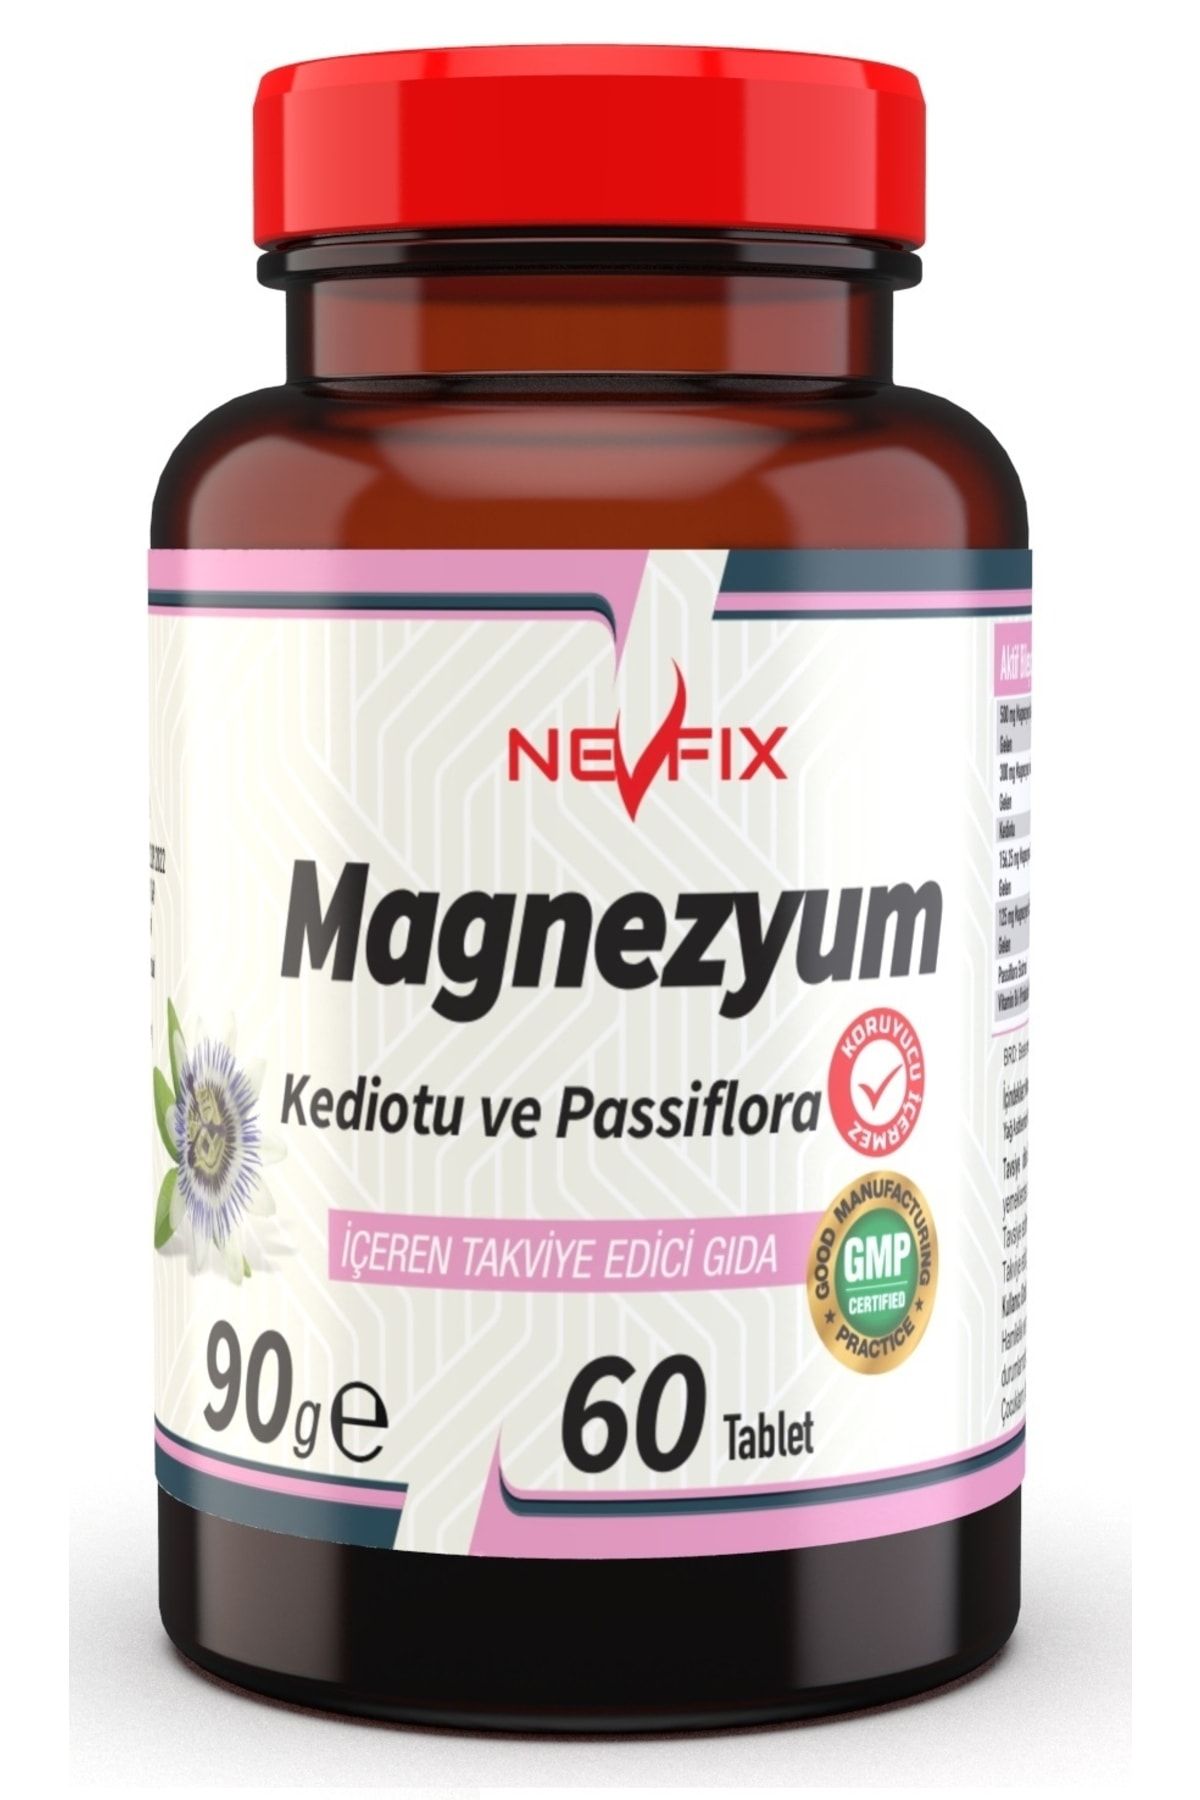 Nevfix Magnezyum Sitrat (klorür, Bisglisinat, Malat, ) Kedi Otu Pasiflora 60 Tablet Magnesium Citrate